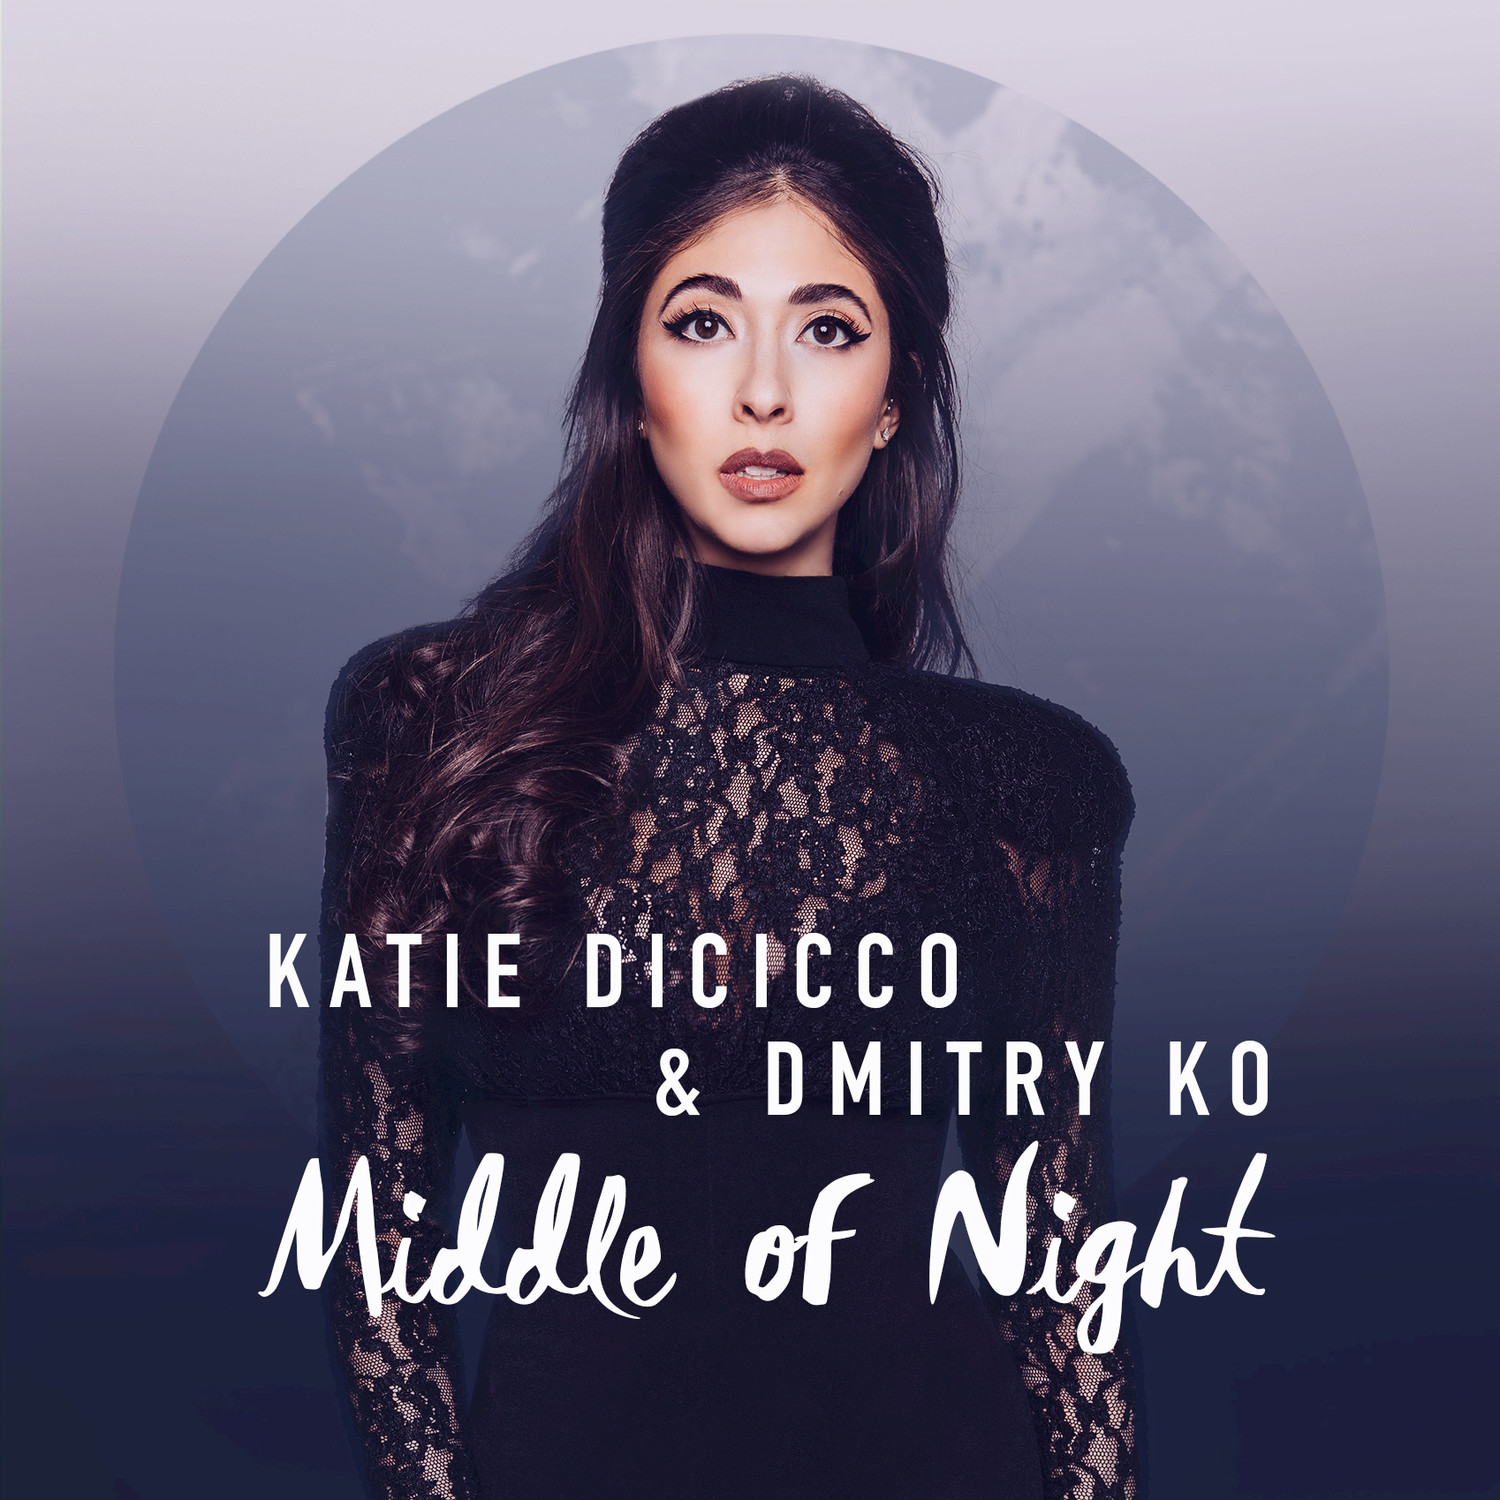 Middle of Night (Radio Edit)